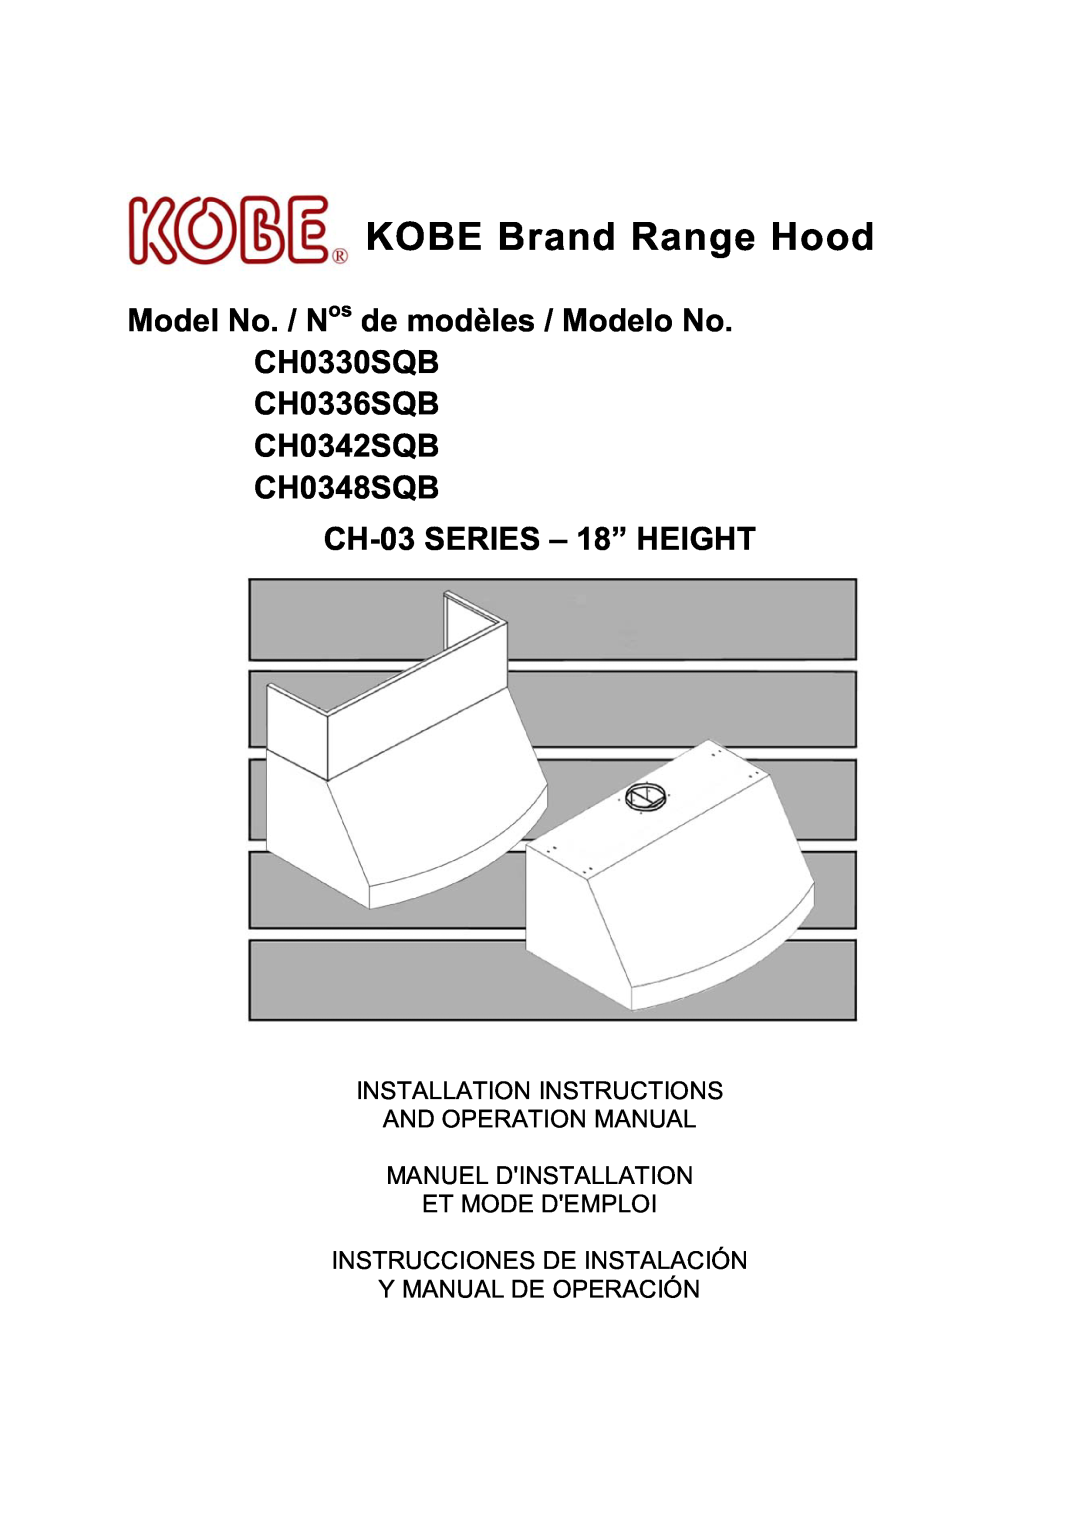 Kobe Range Hoods CH0336SQB, CH0342SQB installation instructions KOBE Brand Range Hood, CH0348SQB CH-03 SERIES - 18” HEIGHT 